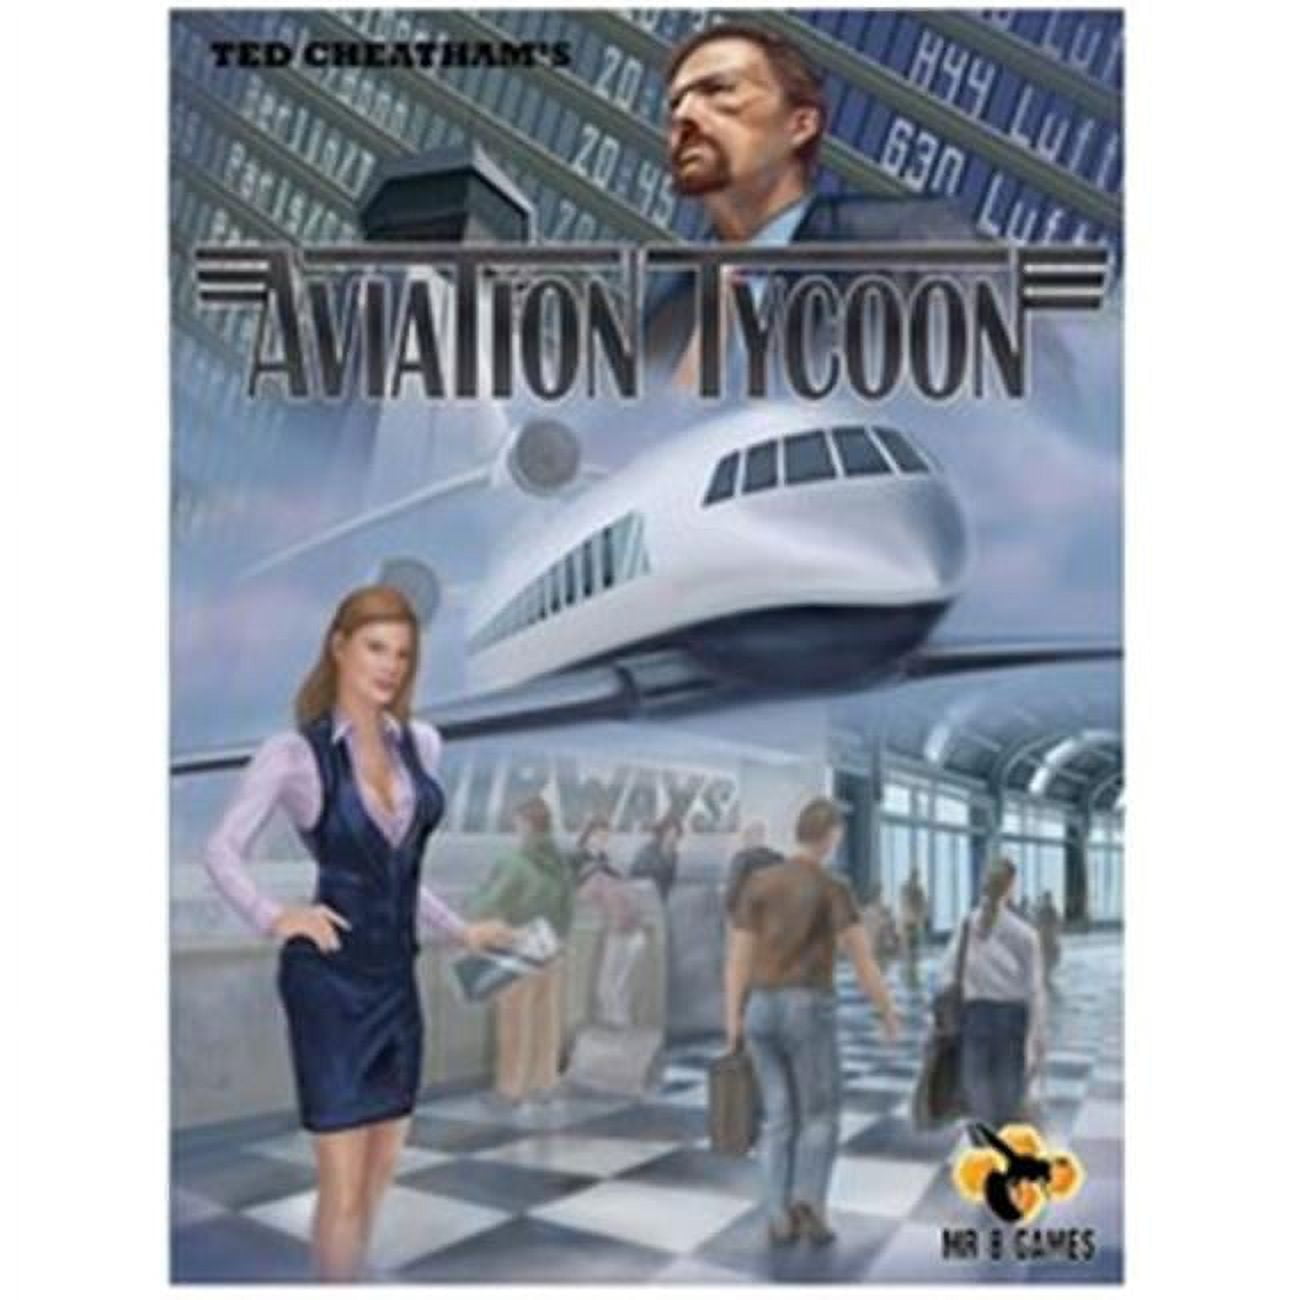 Mib1023 Aviation Tycoon Board Game